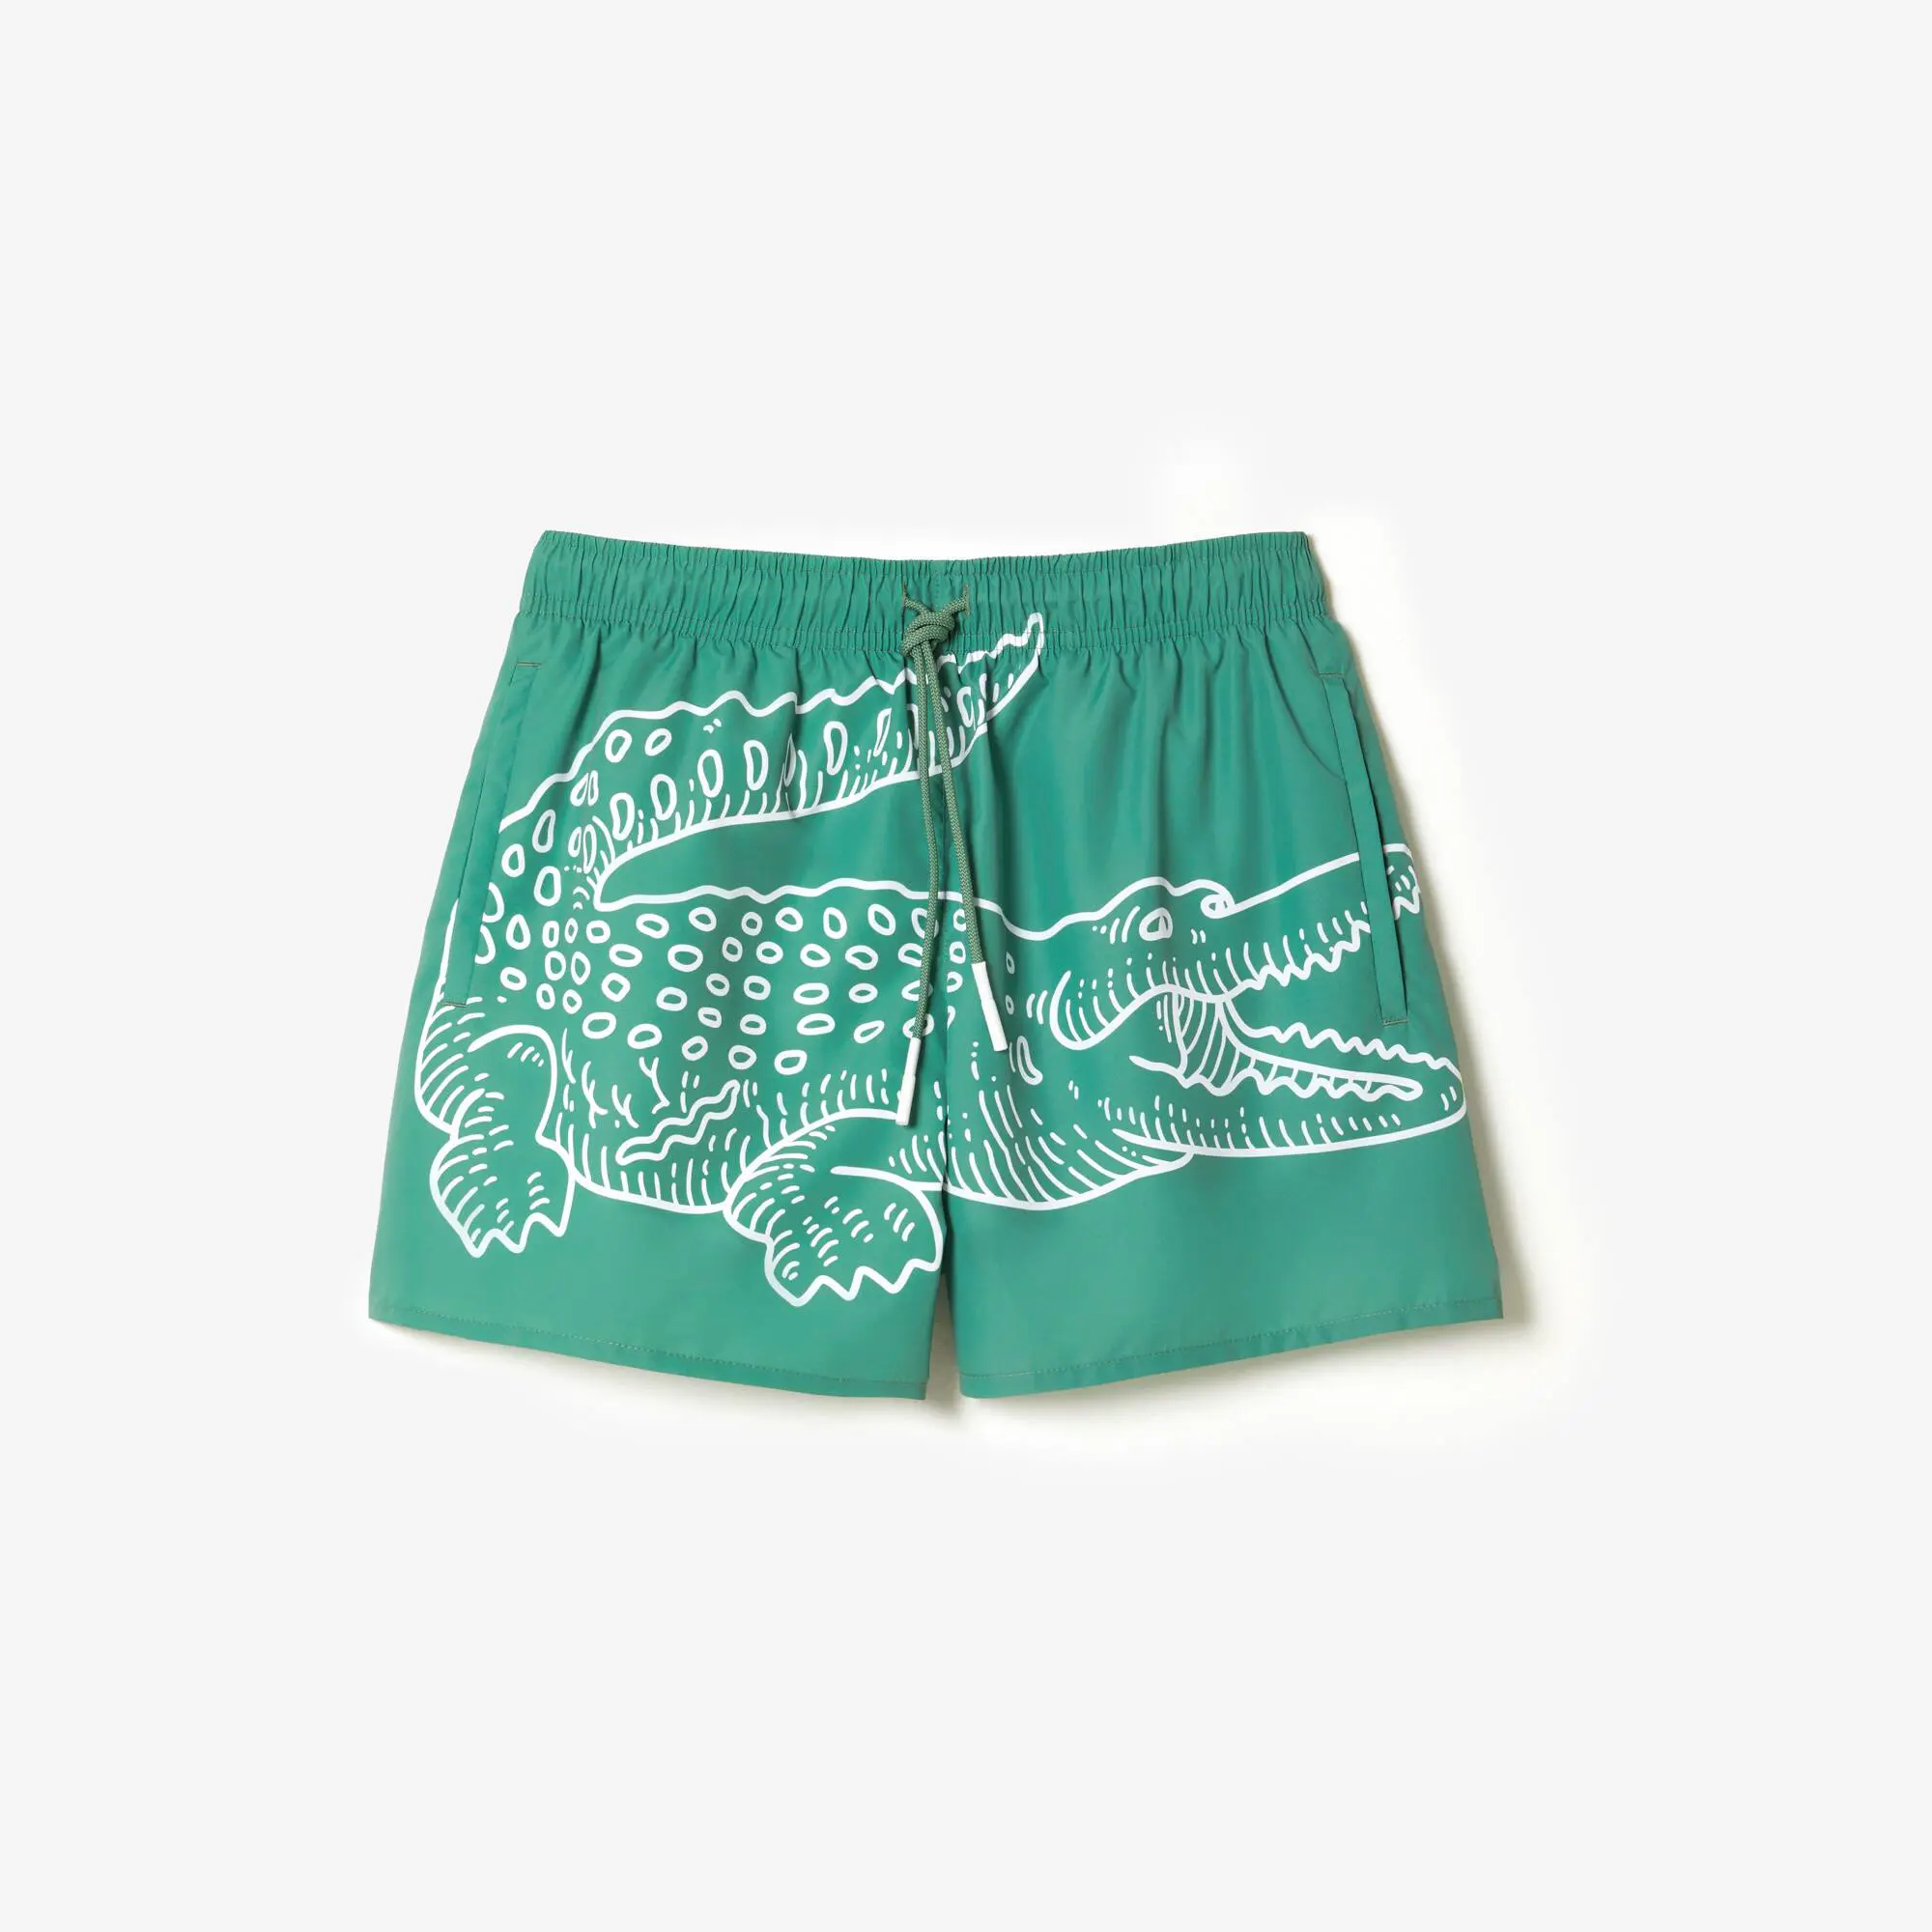 Lacoste Men’s Lacoste Crocodile Print Swim Trunks. 2